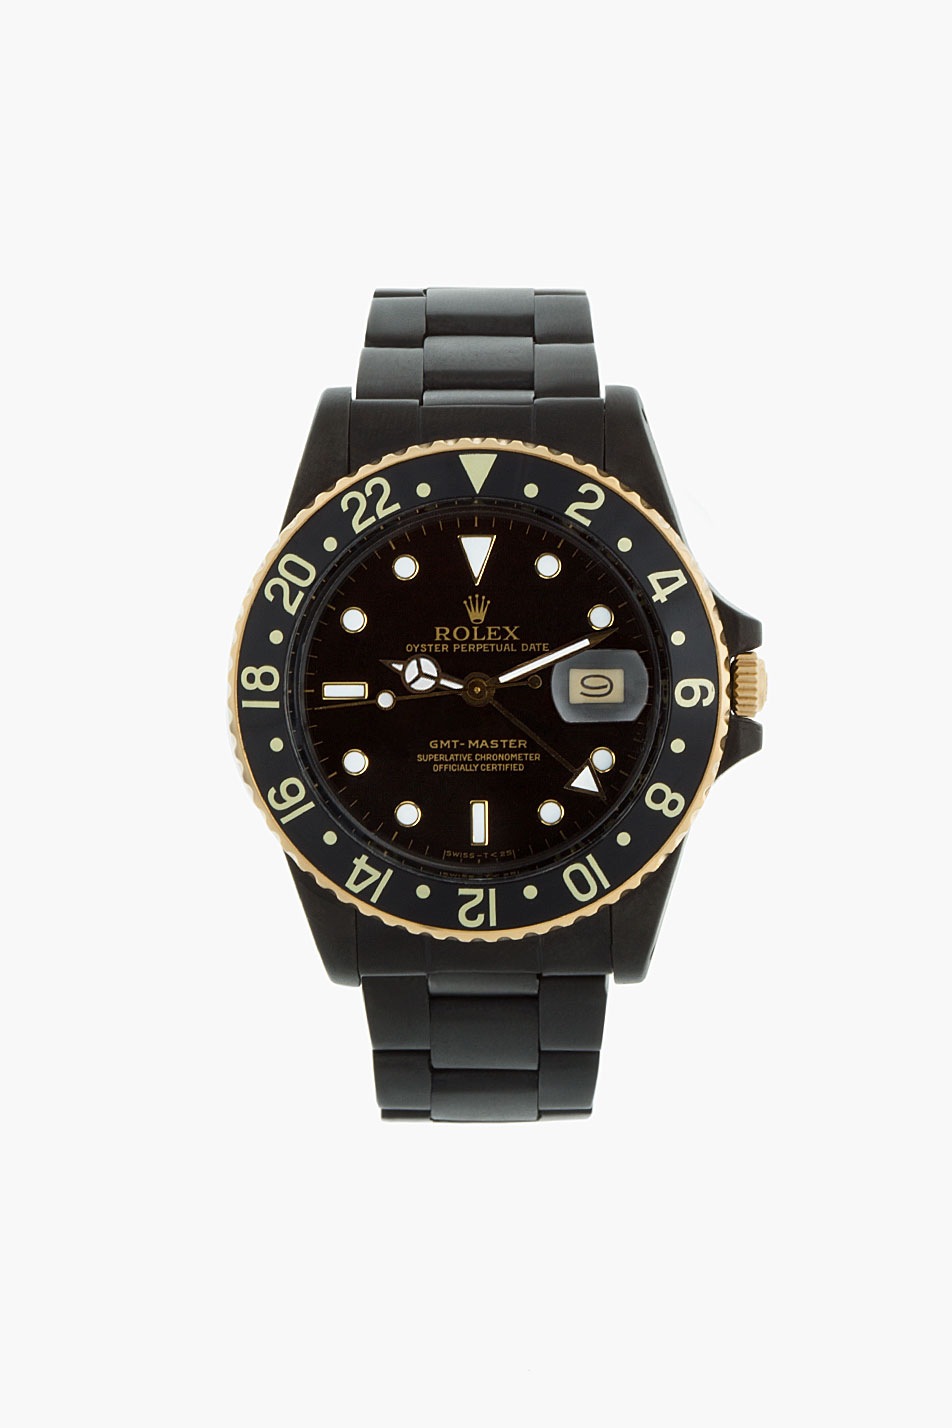 Refurbished Black Rolex Watch Limited Edition 2